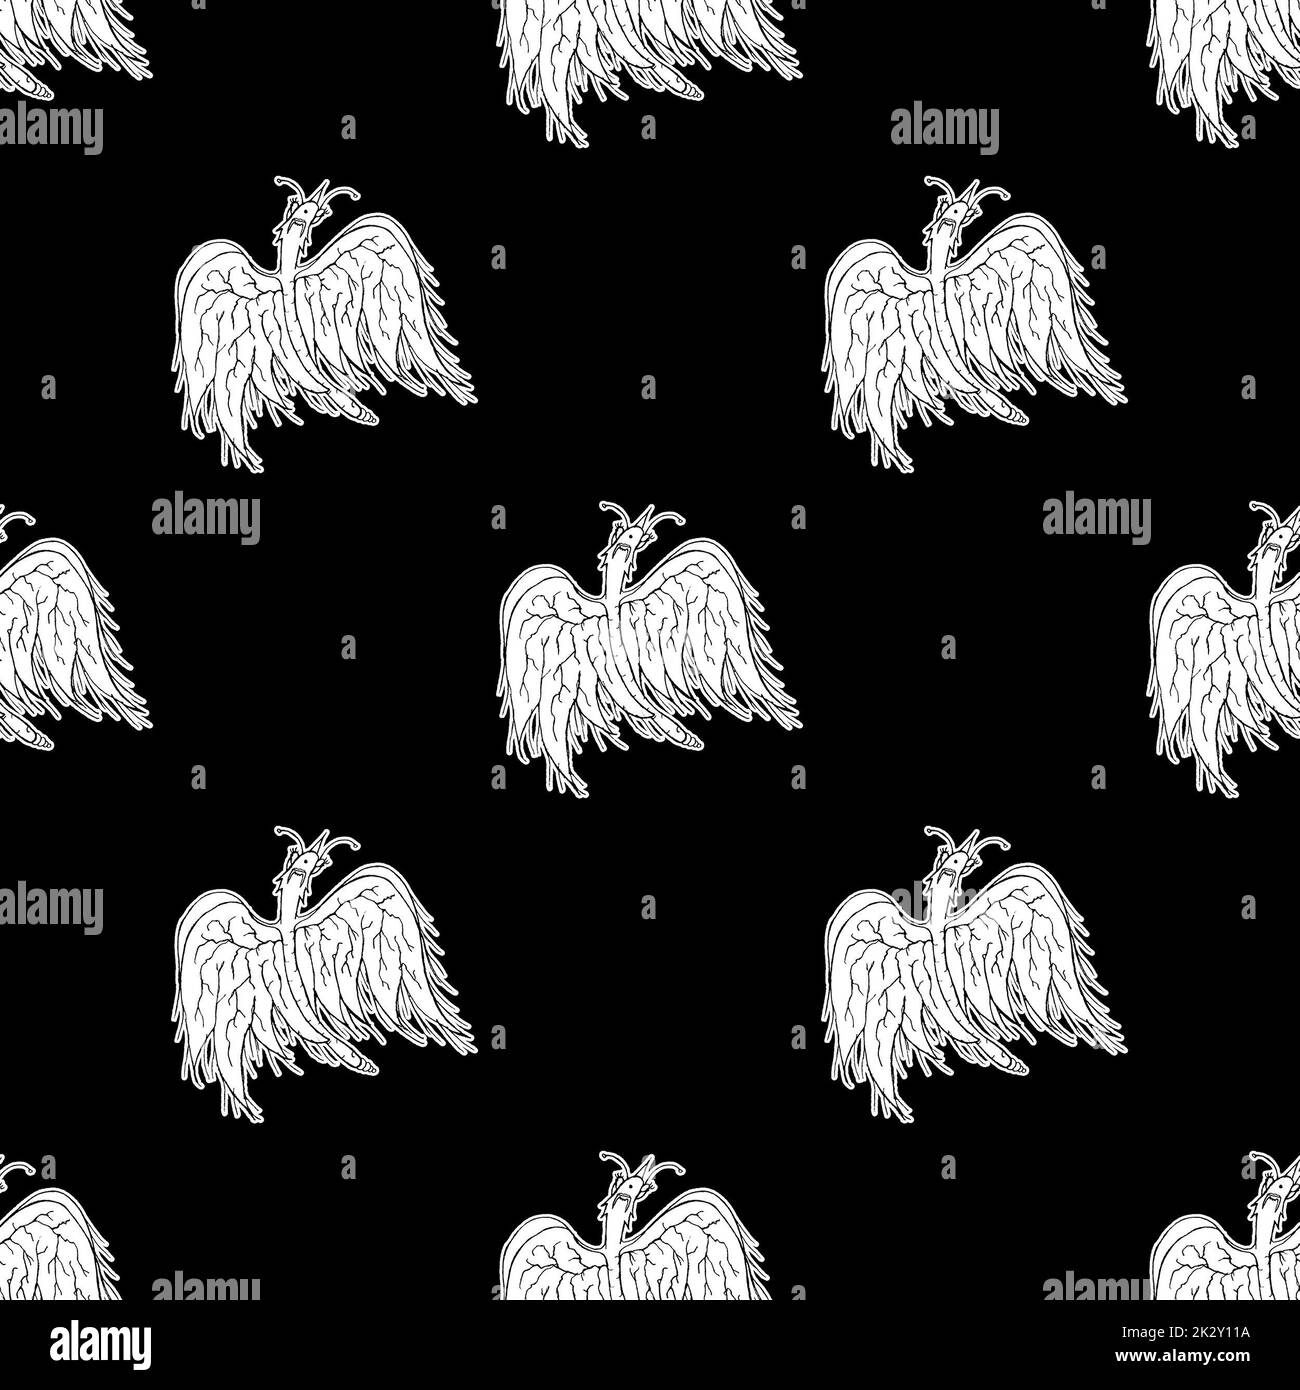 Black and white linear art dragon motif pattern illustration Stock Photo